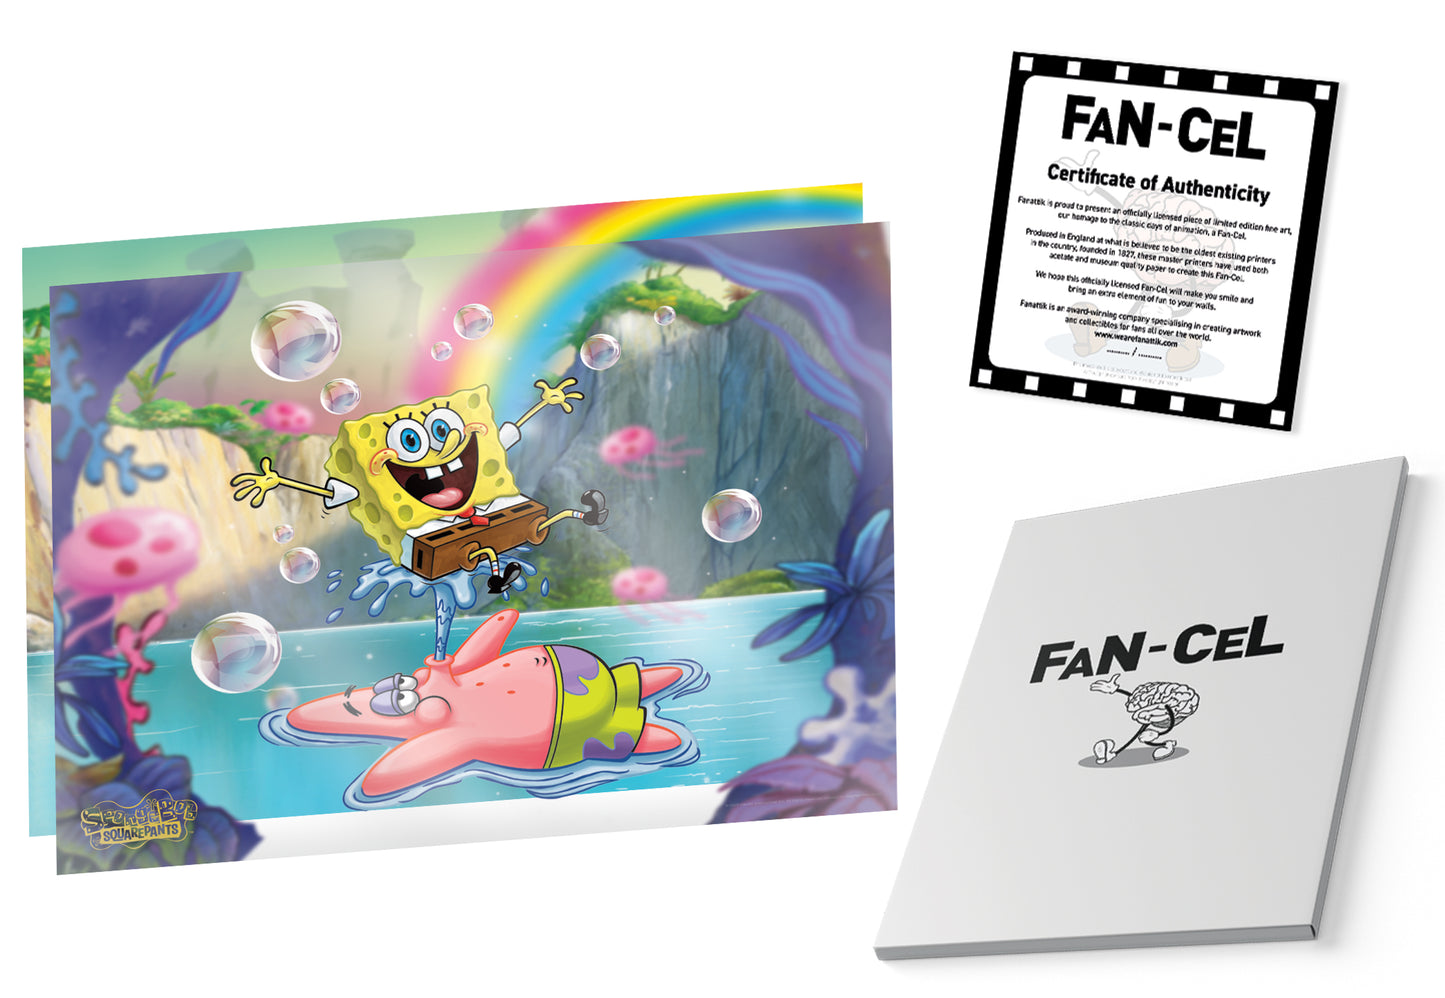 SpongeBob SquarePants Limited Edition Fan-Cel